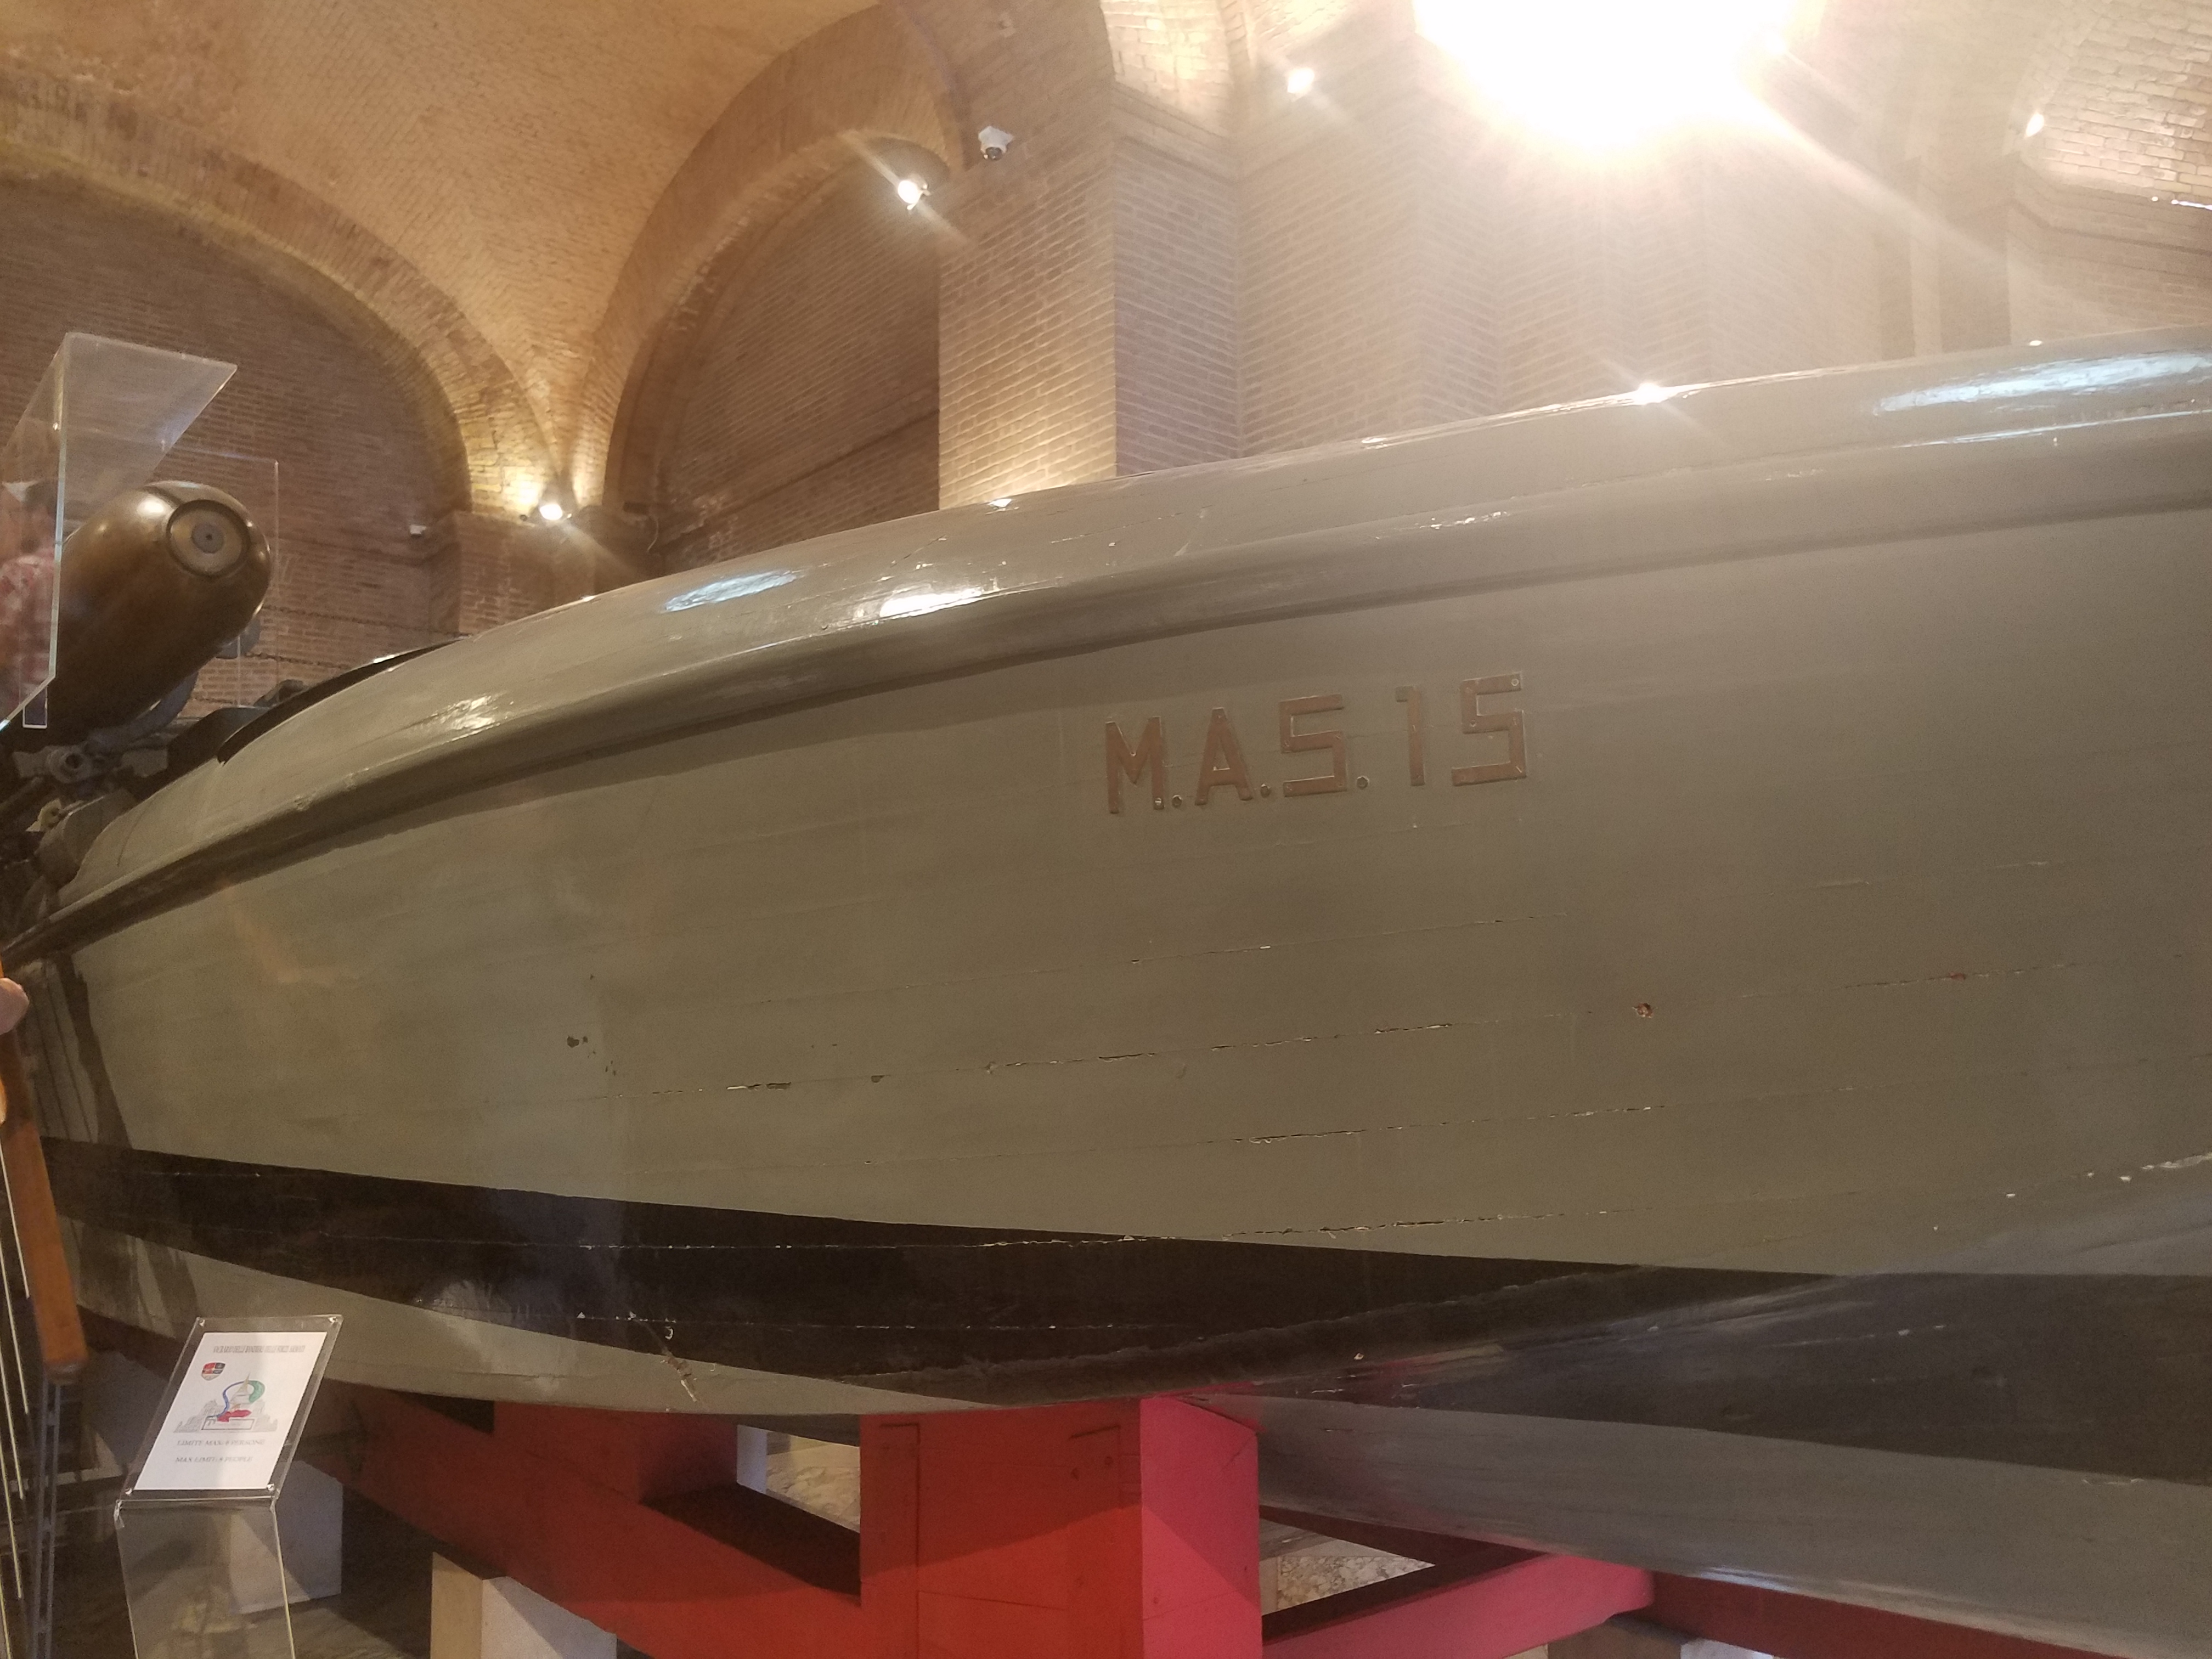 MAS 15 torpedo boat, Vittorio Emanuele II National Monument museum, Rome, Italy, 10 May 2018, photo 3 of 6